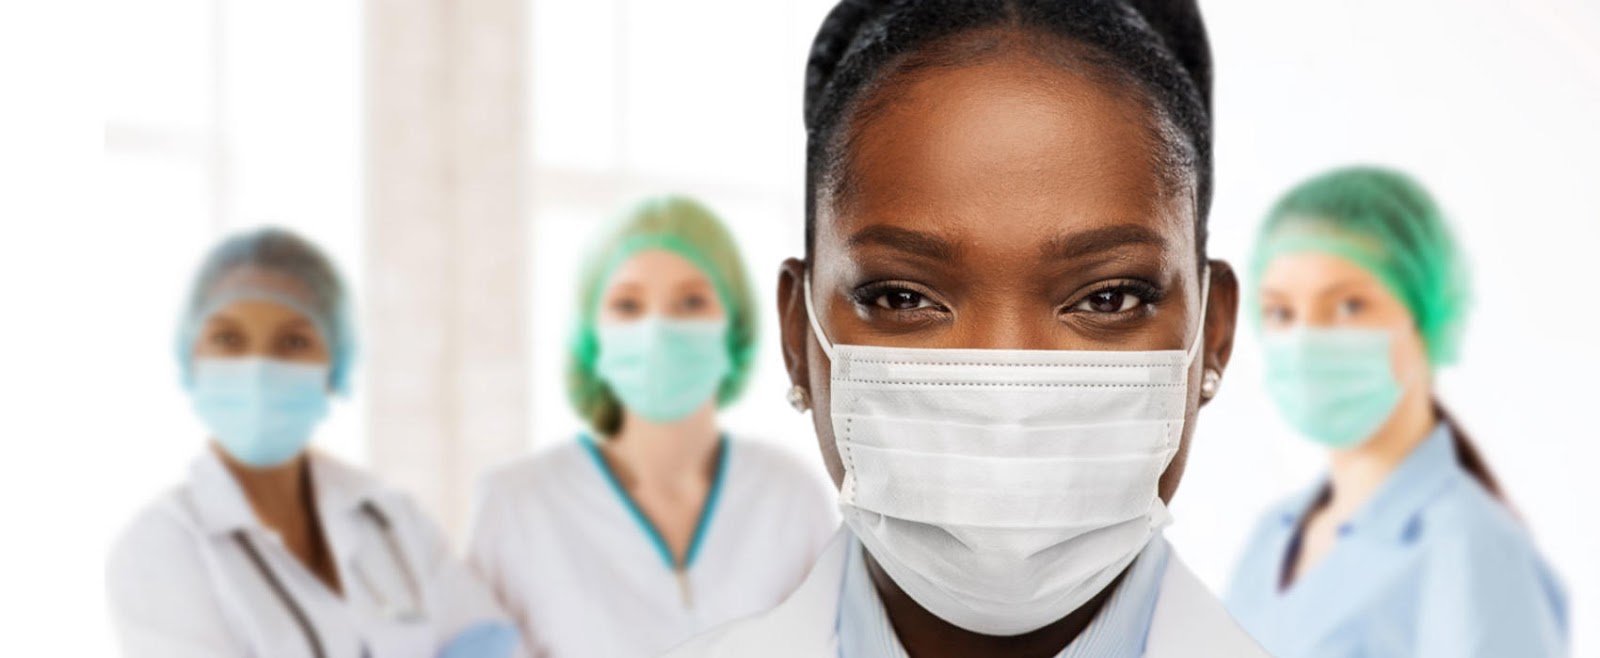 World Health Worker Week Amid a global pandemic, we must celebrate